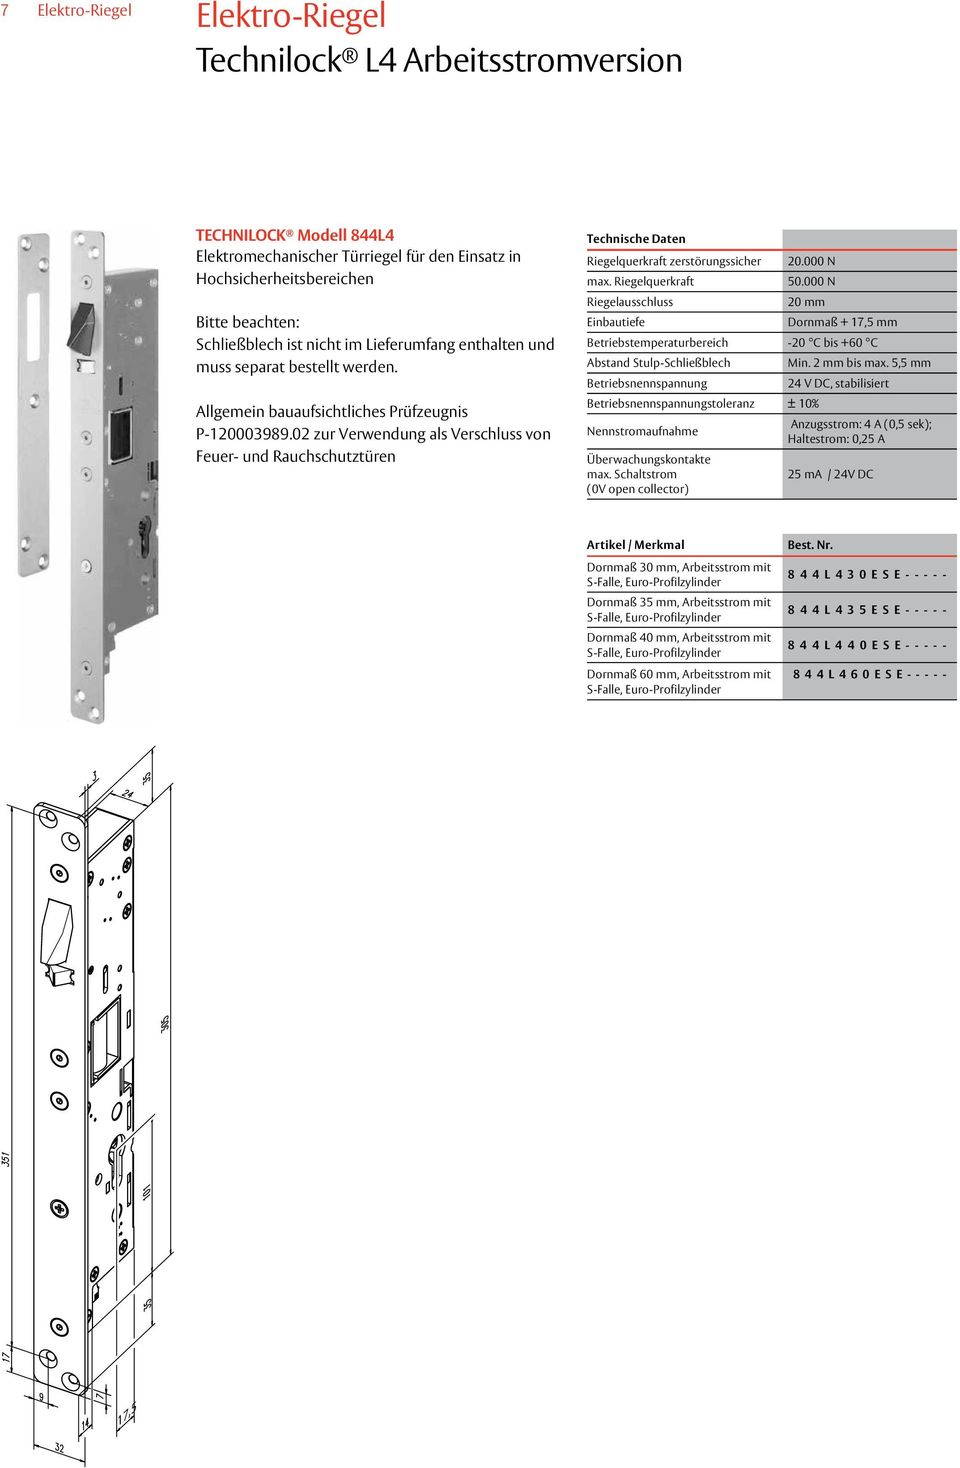 Riegelquerkraft 50.000 N Riegelausschluss 20 mm Einbautiefe Dornmaß + 17,5 mm Betriebstemperaturbereich -20 C bis +60 C Abstand Stulp-Schließblech Min. 2 mm bis max.